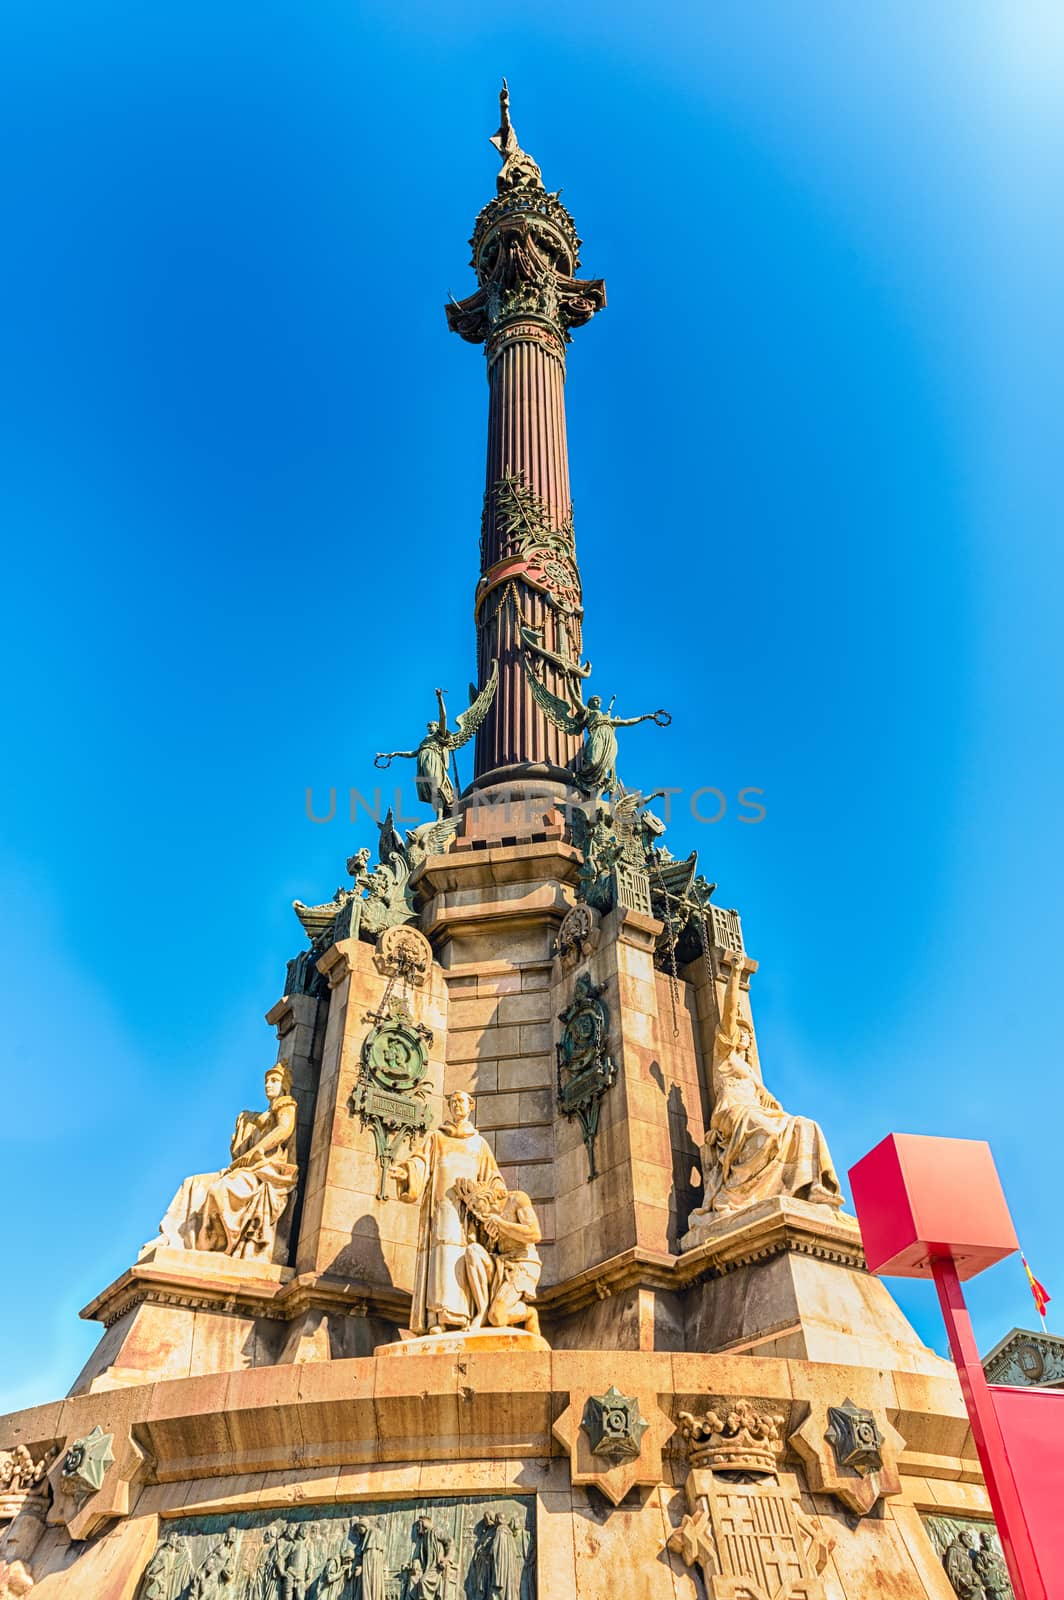 Columbus monument in Barcelona, Catalonia, Spain by marcorubino